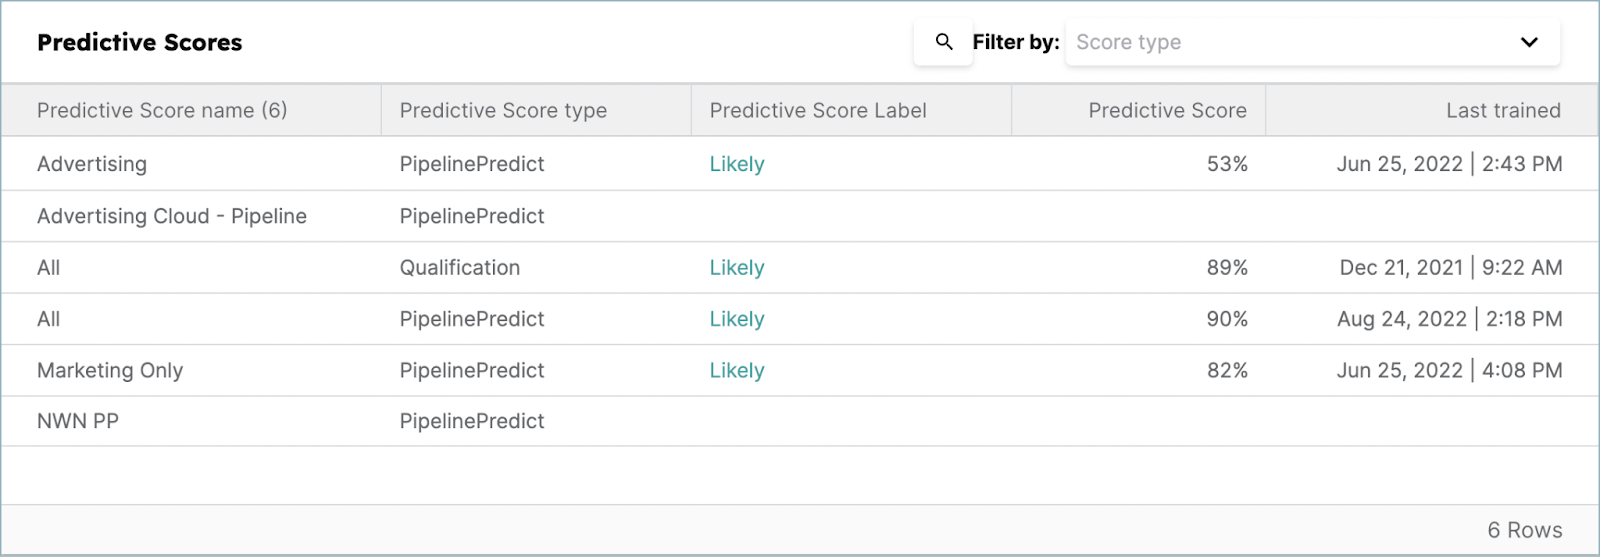 Predictive_Scores_Acct.png